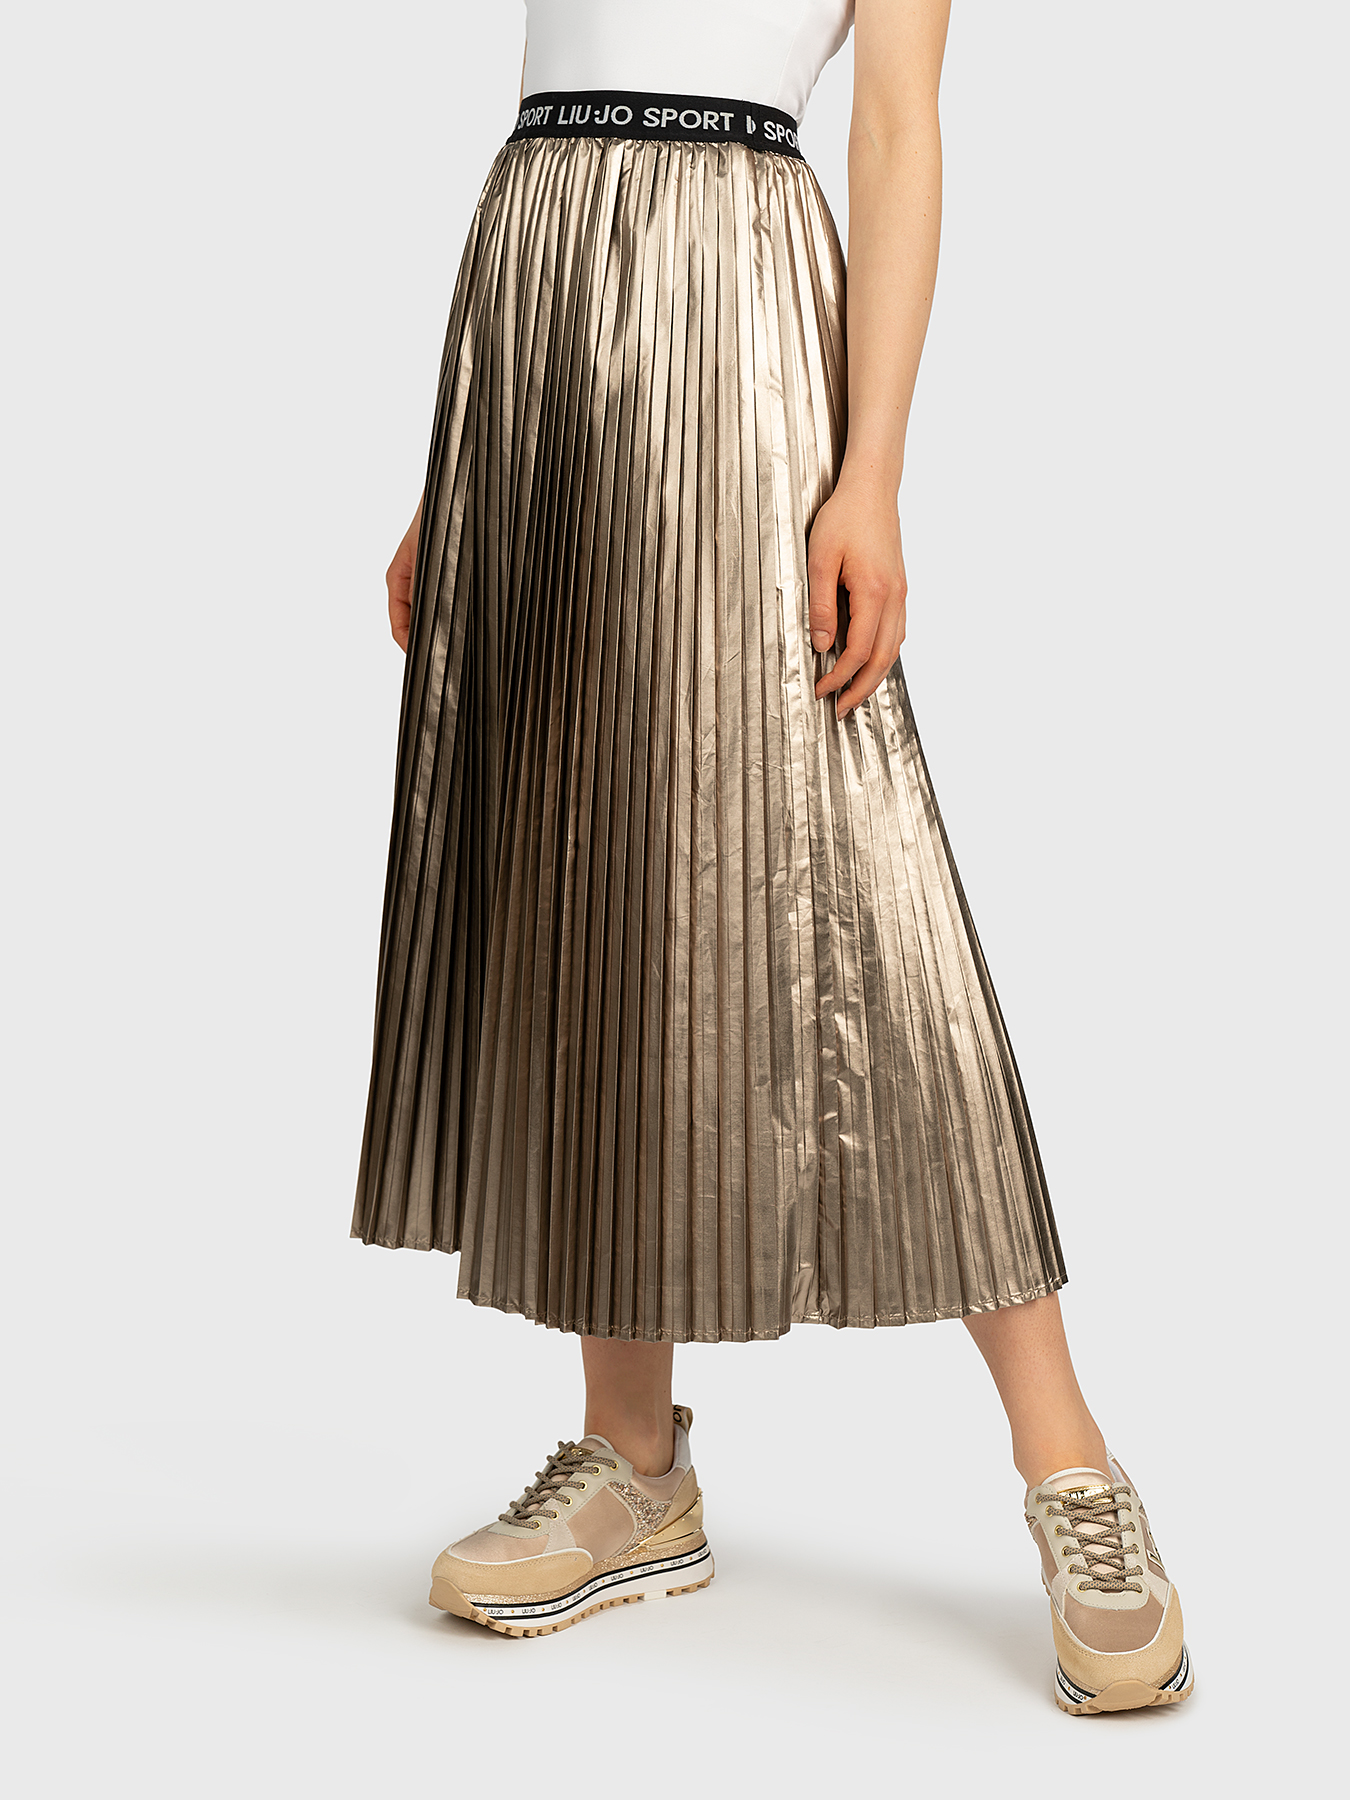 Conform Chemicus Actie Pleated skirt in gold color brand LIU JO — Globalbrandsstore.com/en